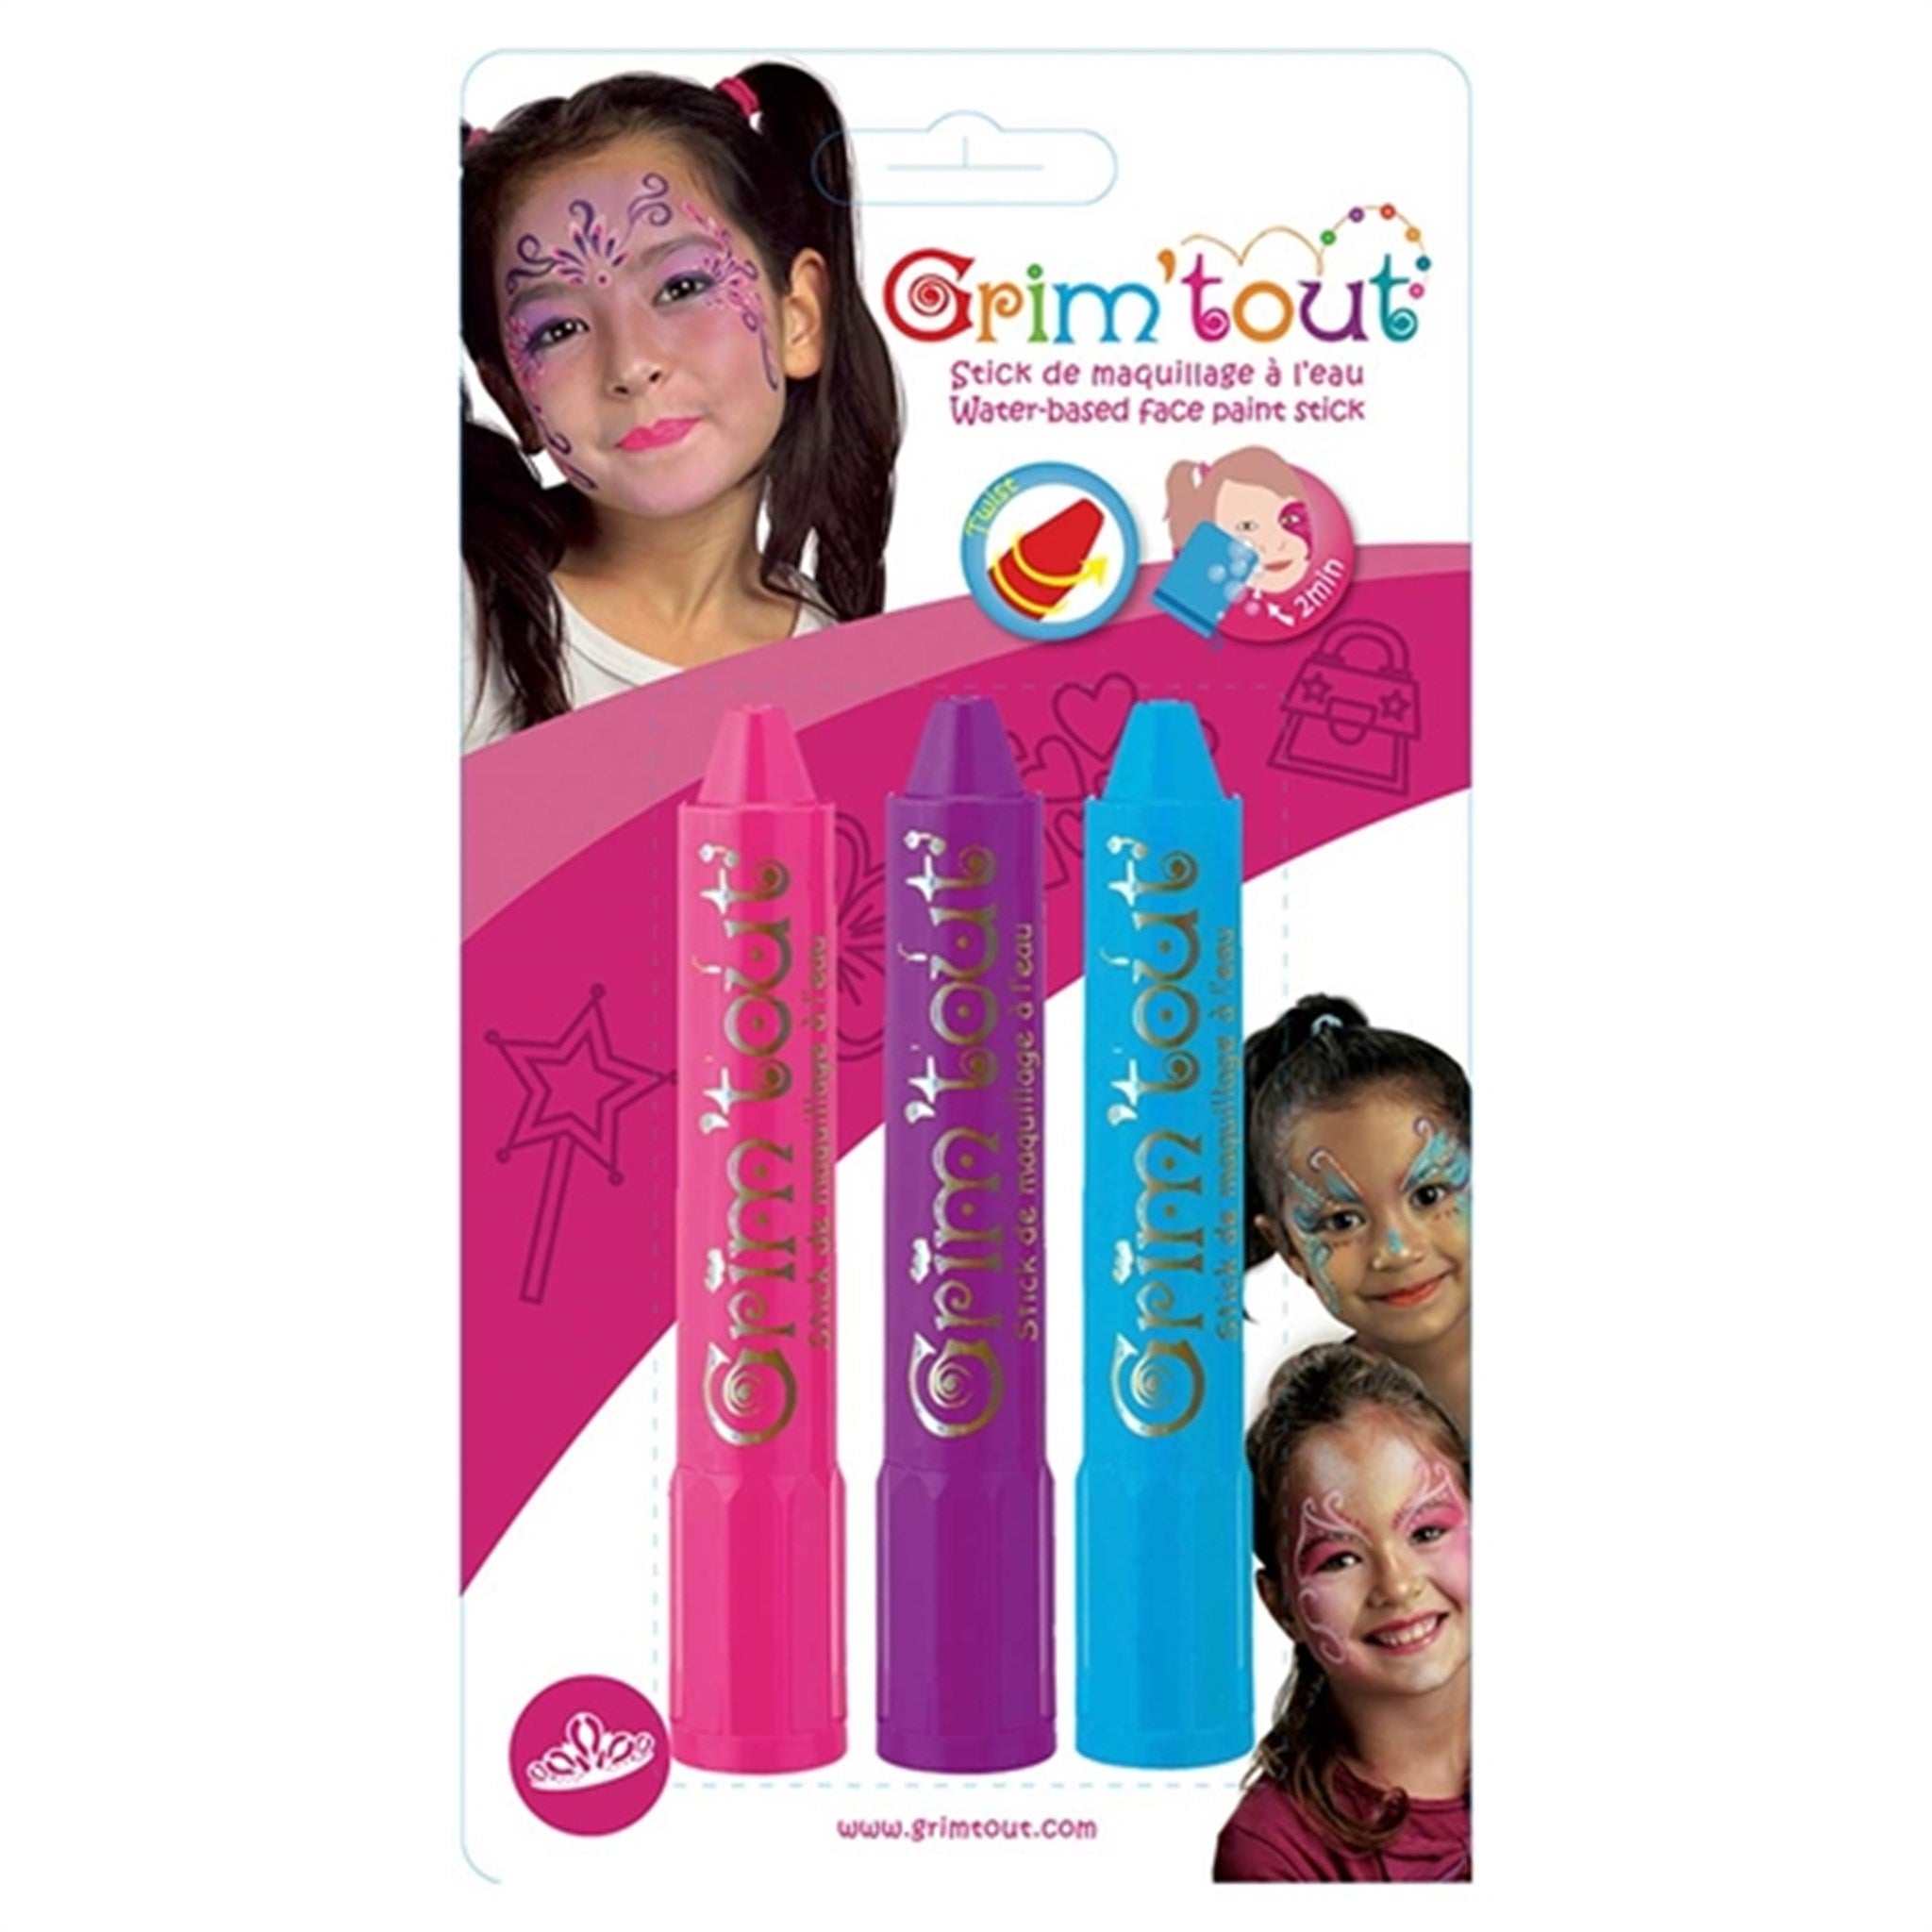 Grim'tout Makeup Princesse 3 Pack